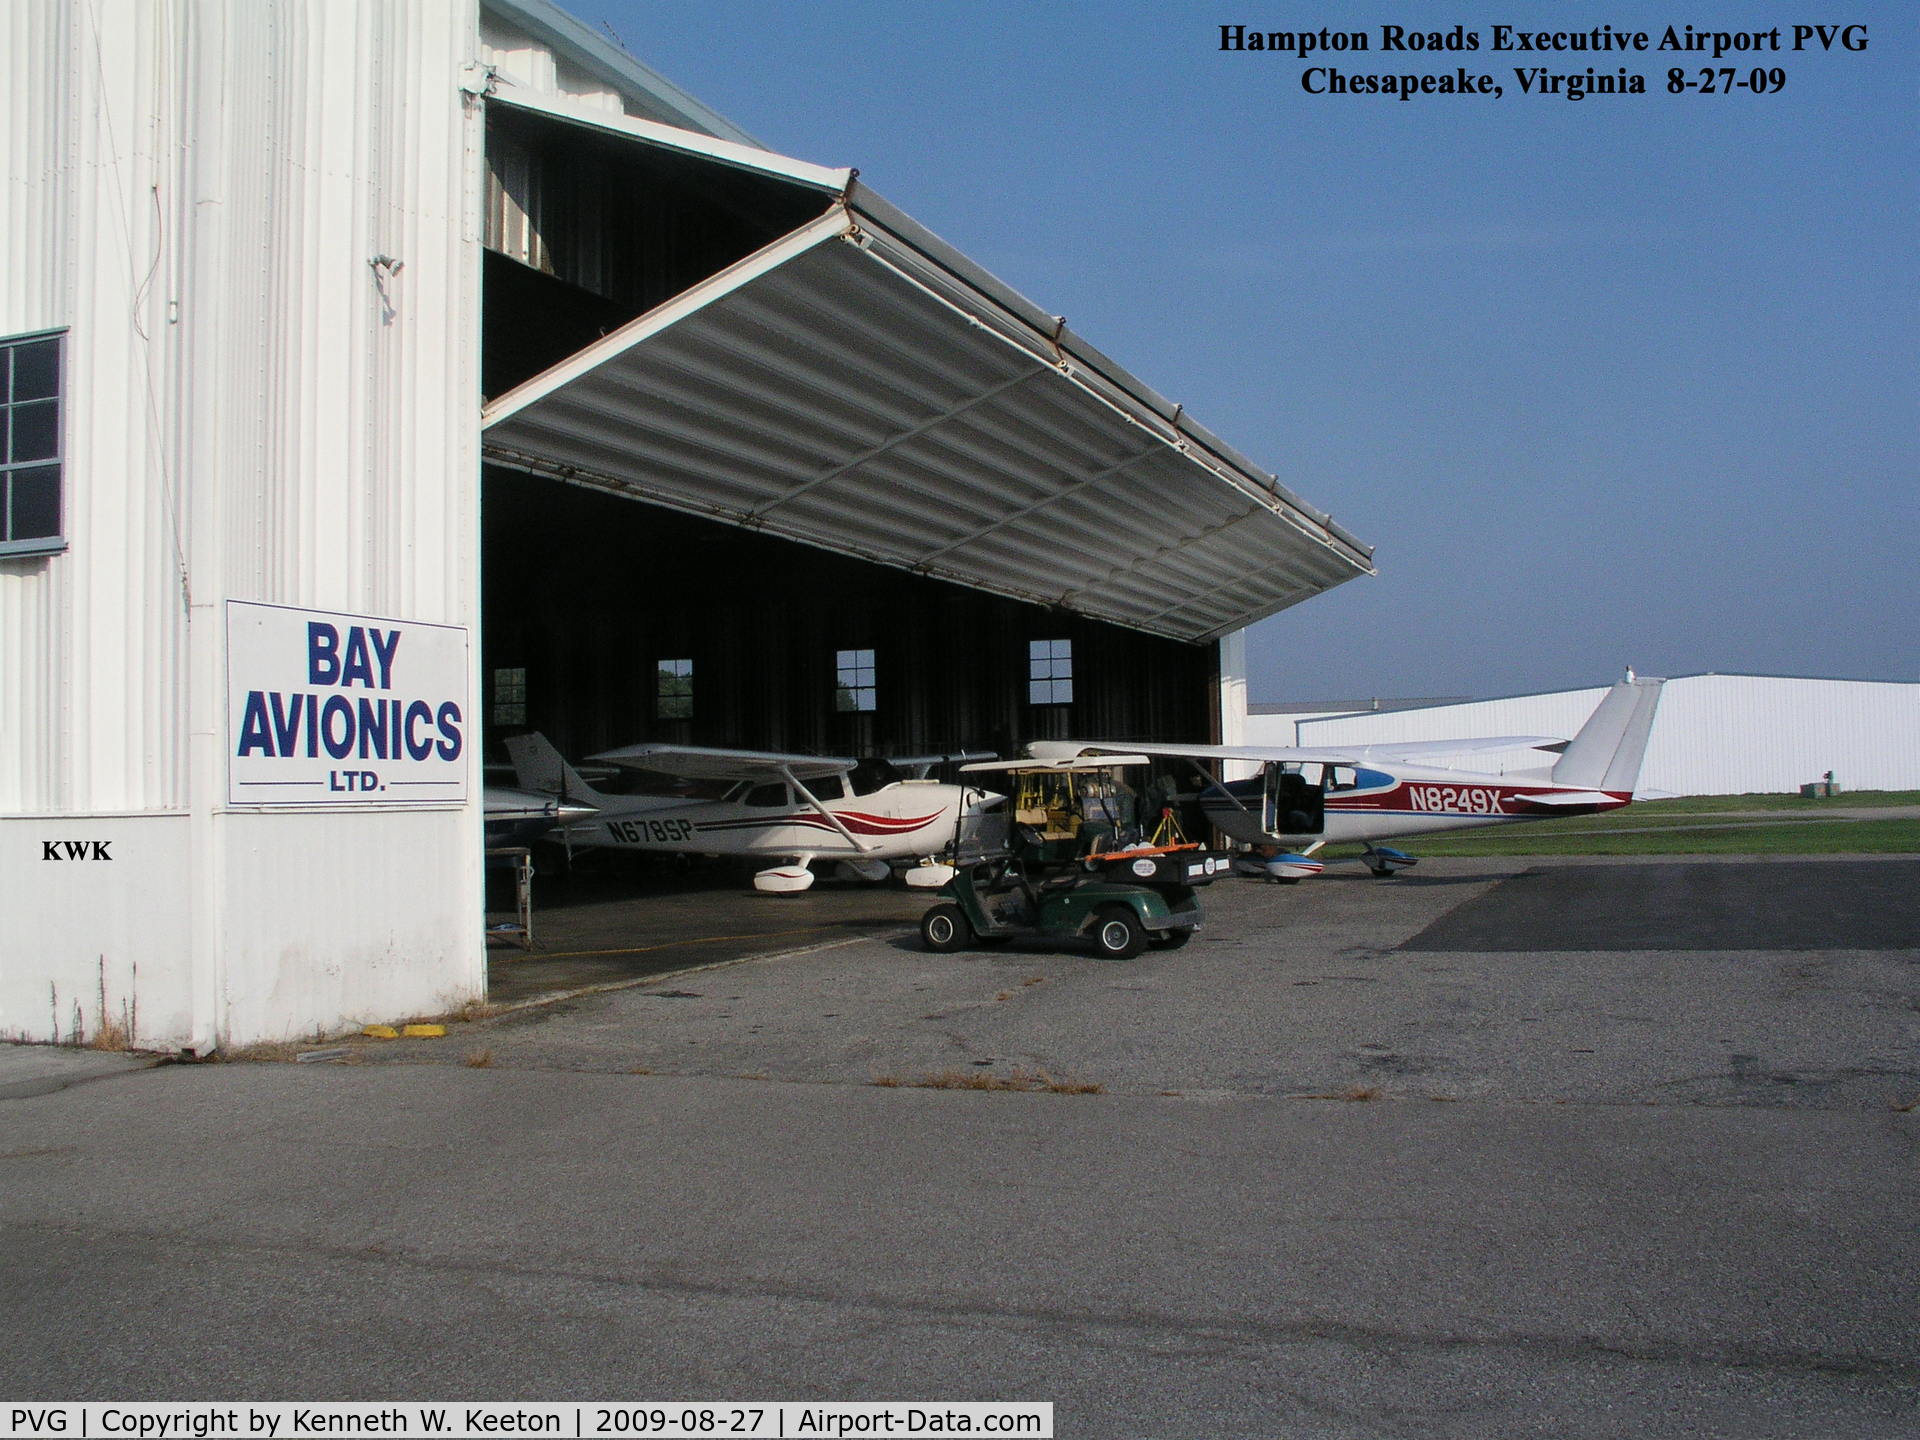 Hampton Roads Executive Airport (PVG) - Hampton Roads Executive Airport PVG Chesapeake, Virginia Photo by Kenneth W. Keeton 8-27-09.